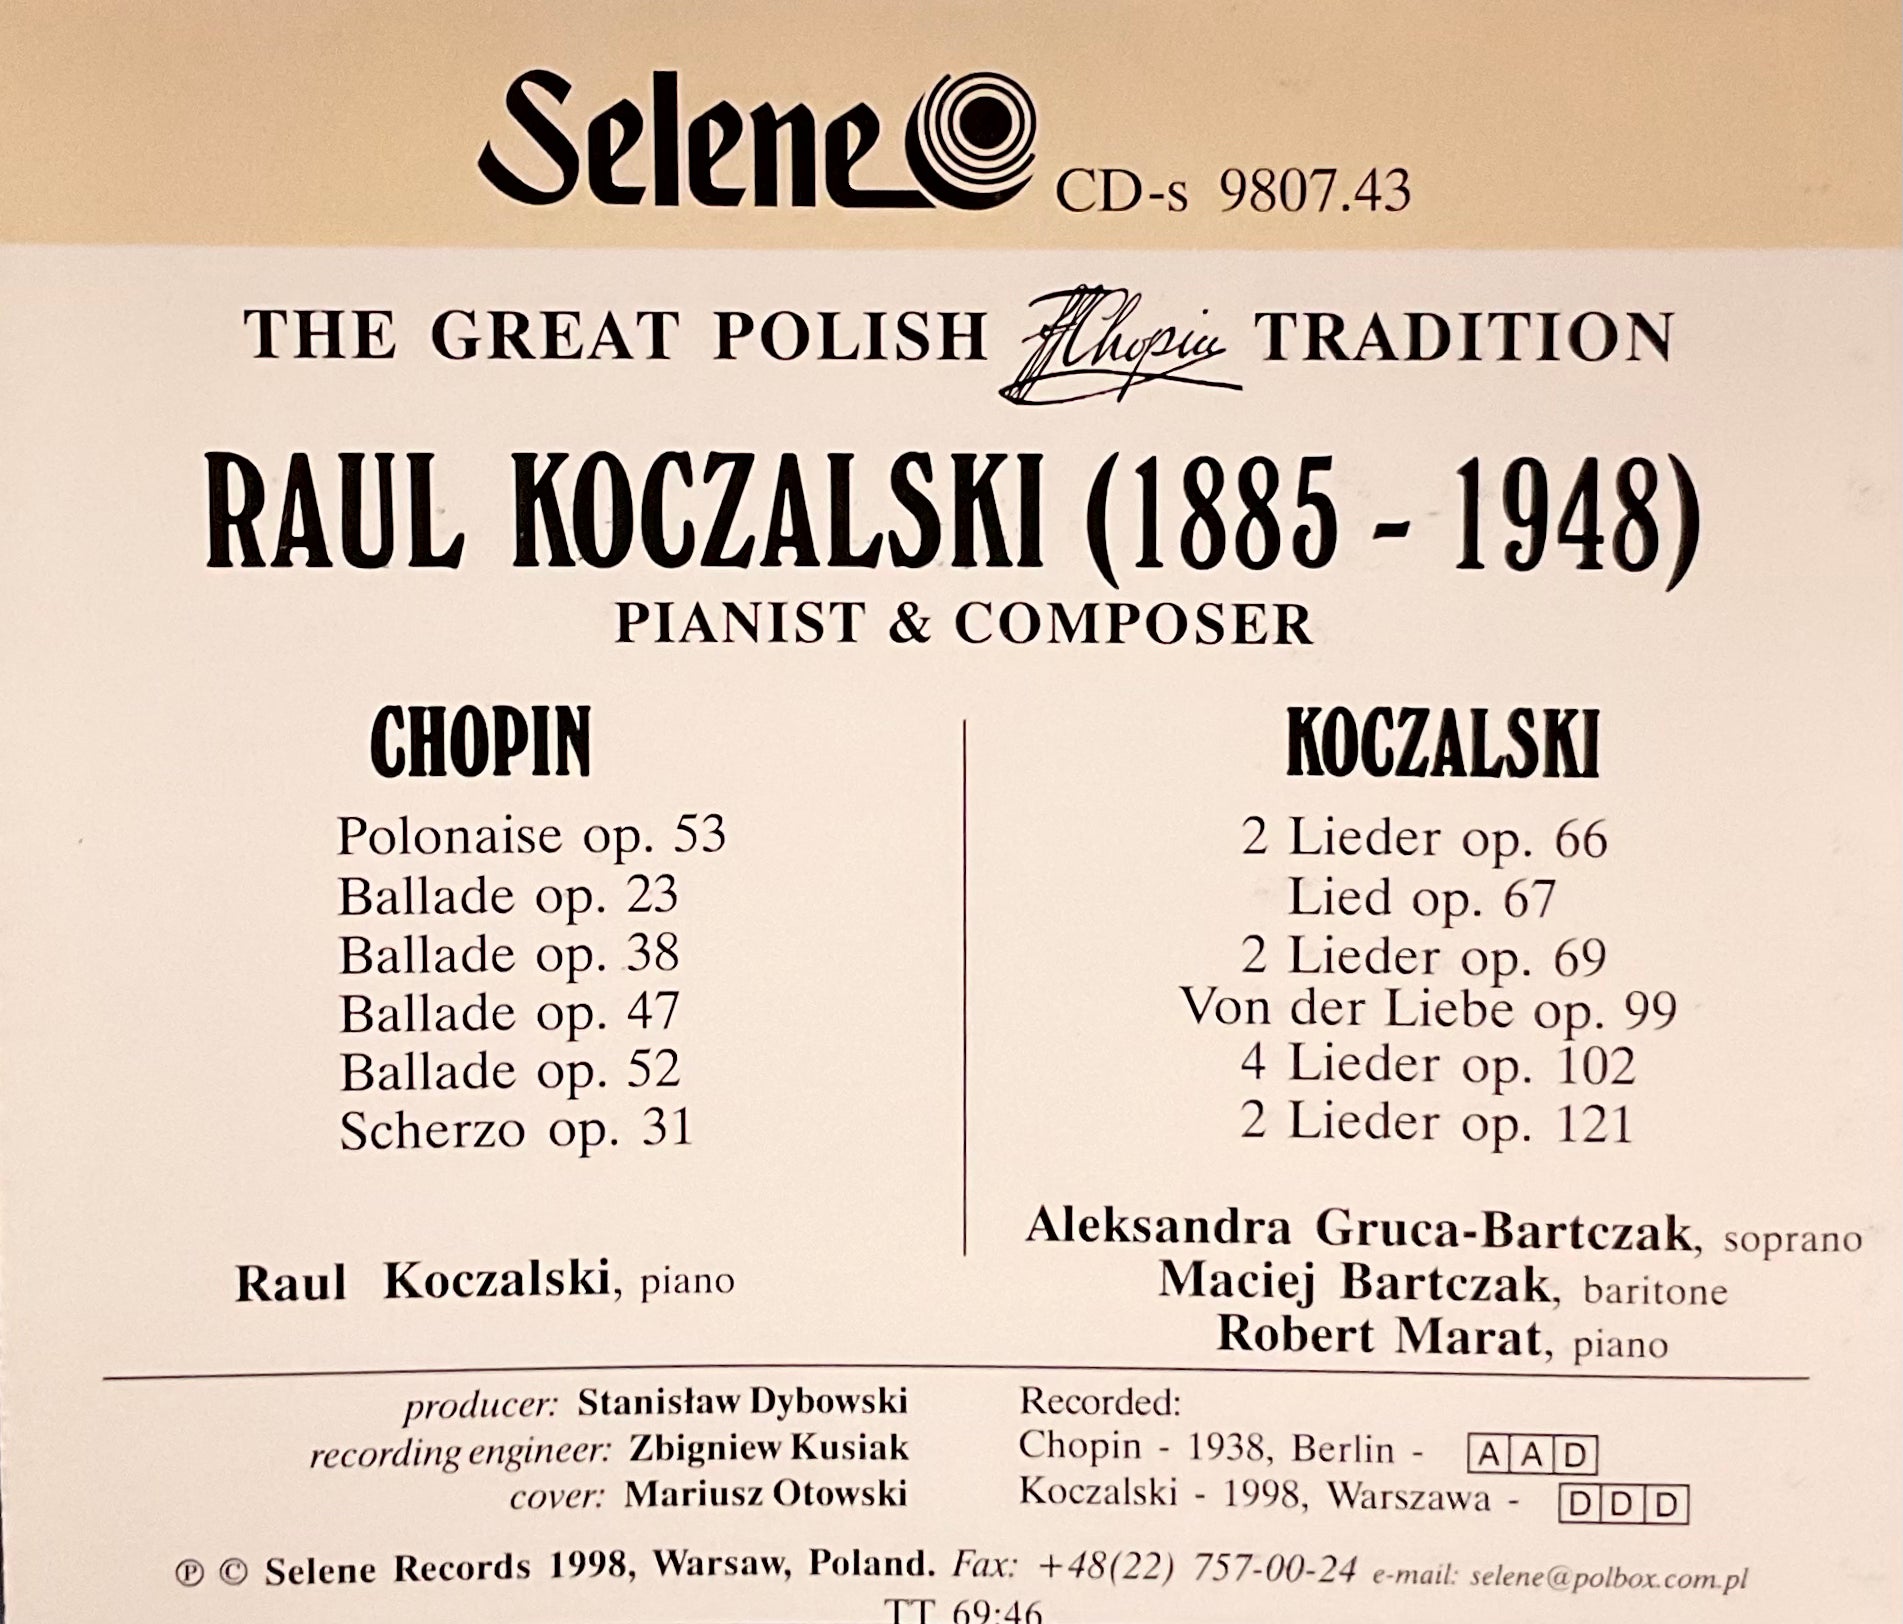 The Great Polish Chopin Tradition - Raul Koczalski Vol. 4